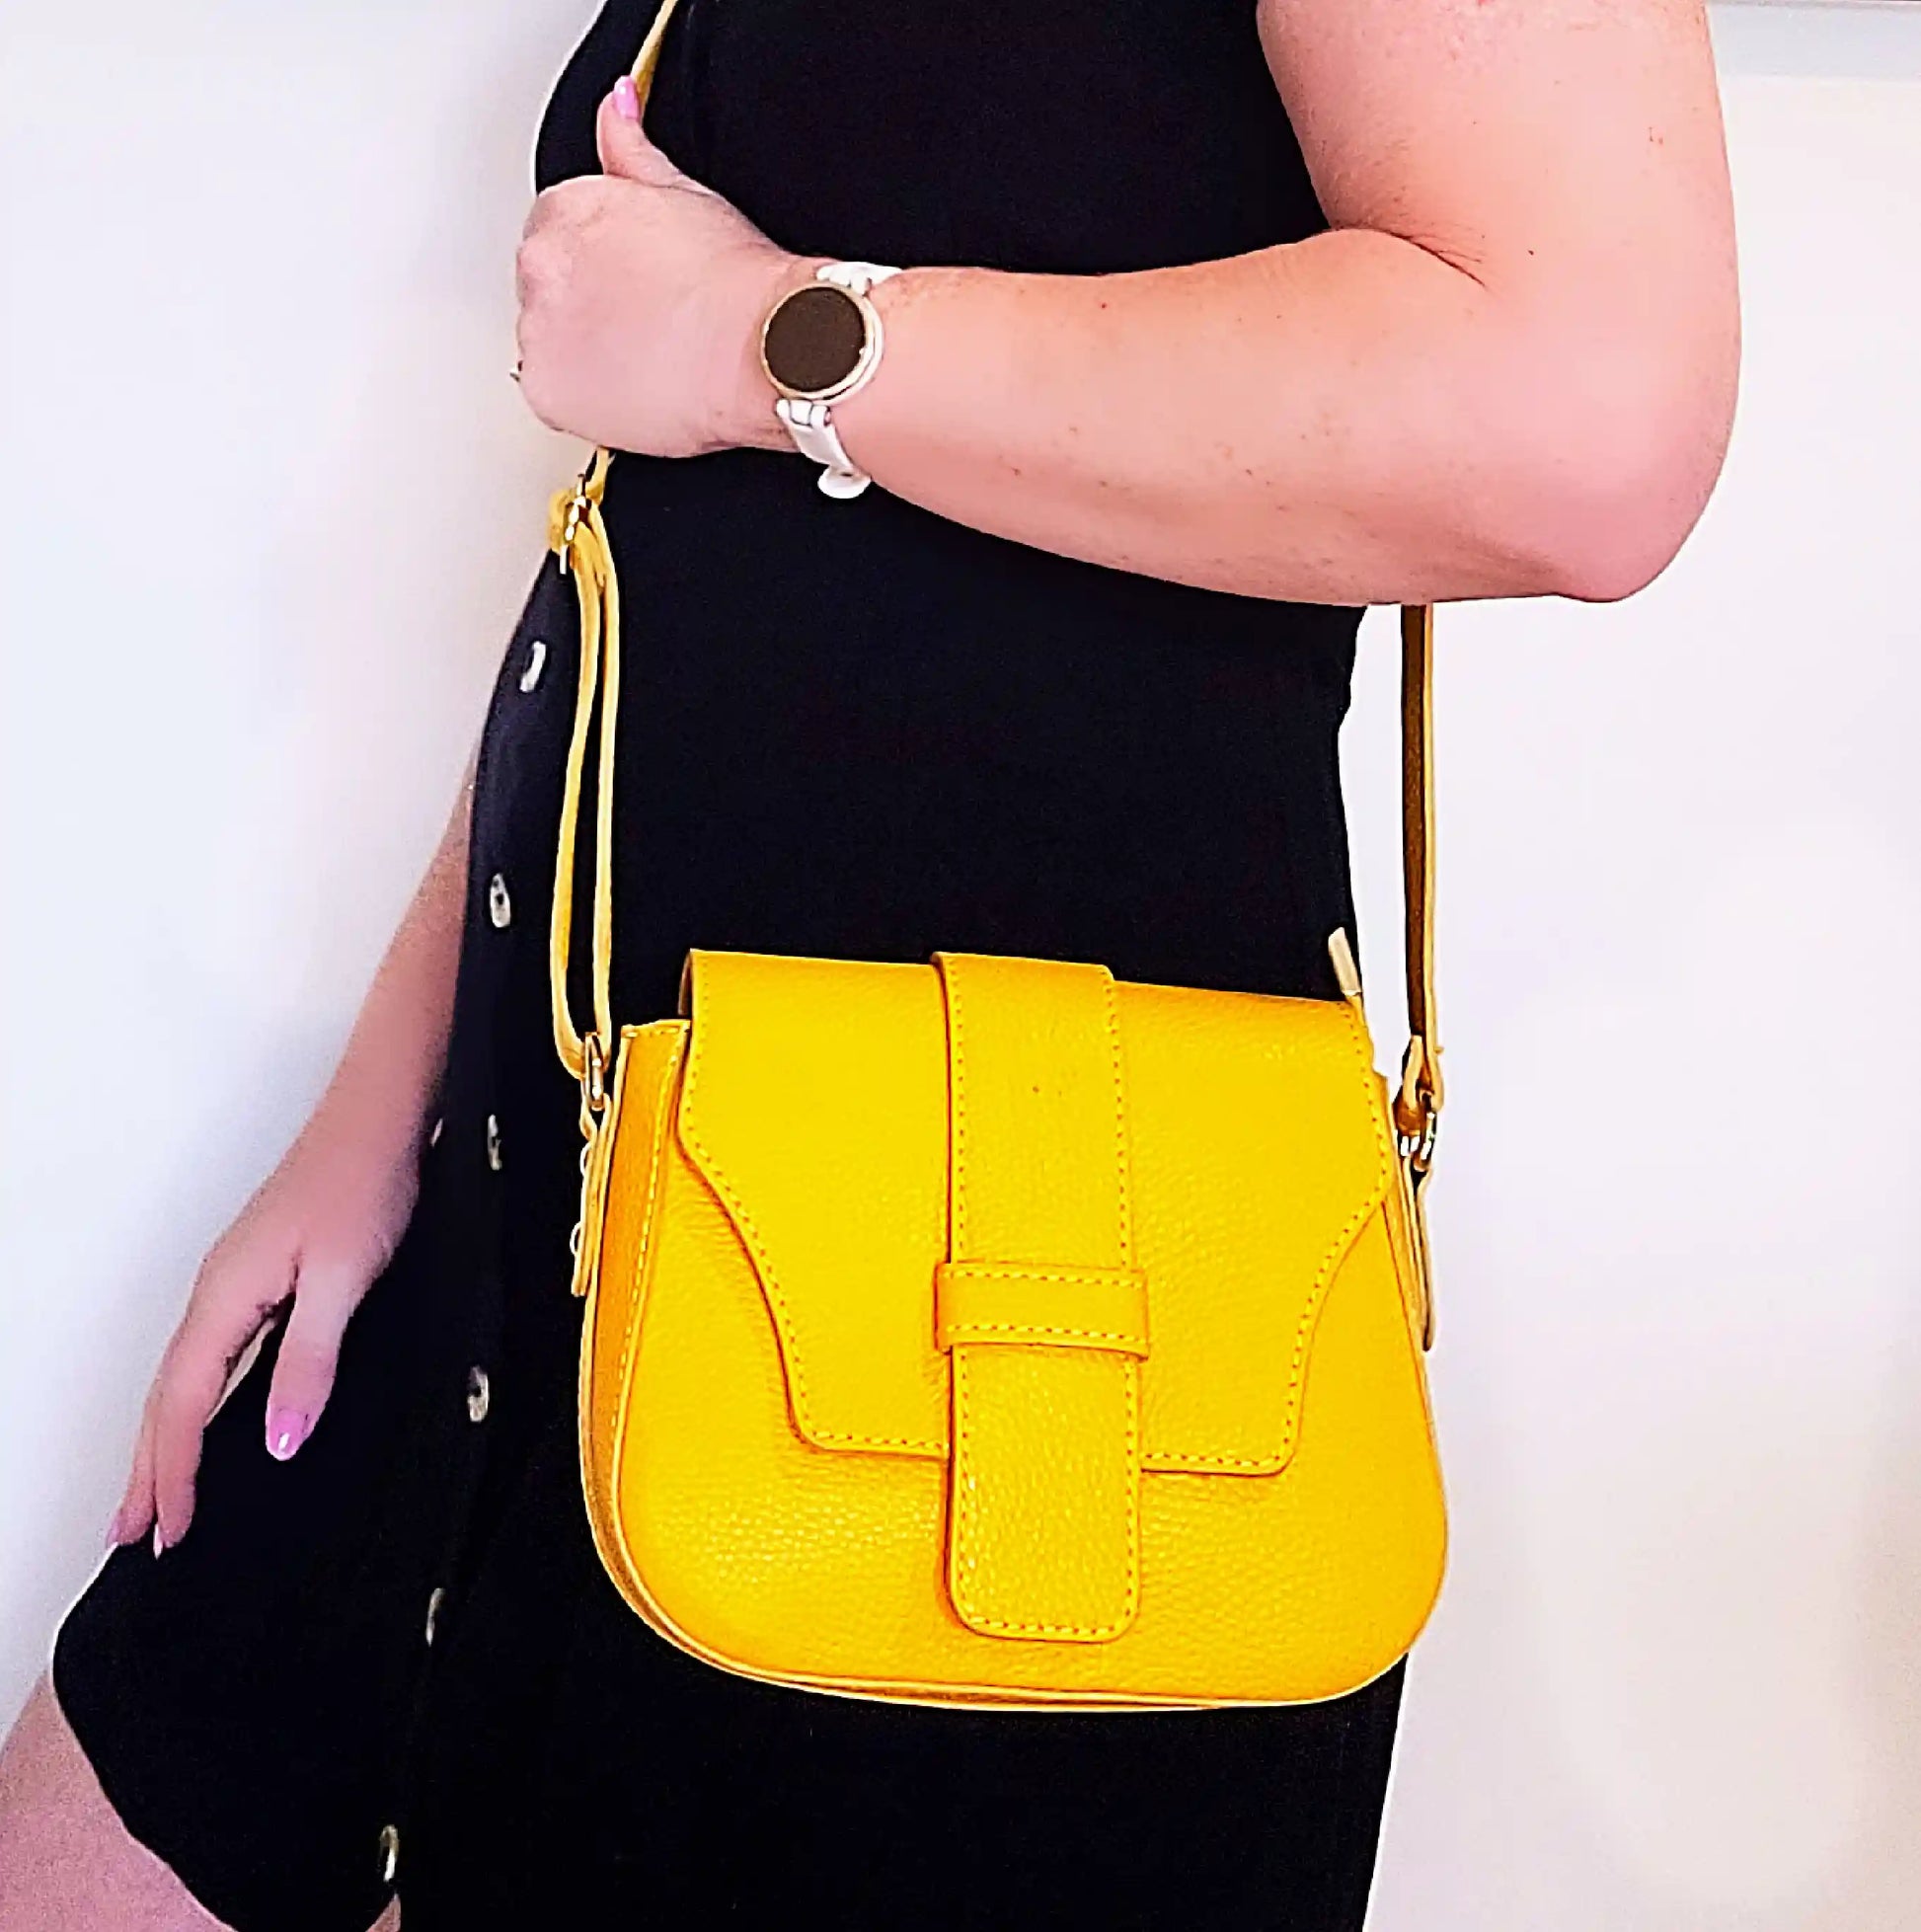 Lady-wearing-Yellow-leather-saddle-bag